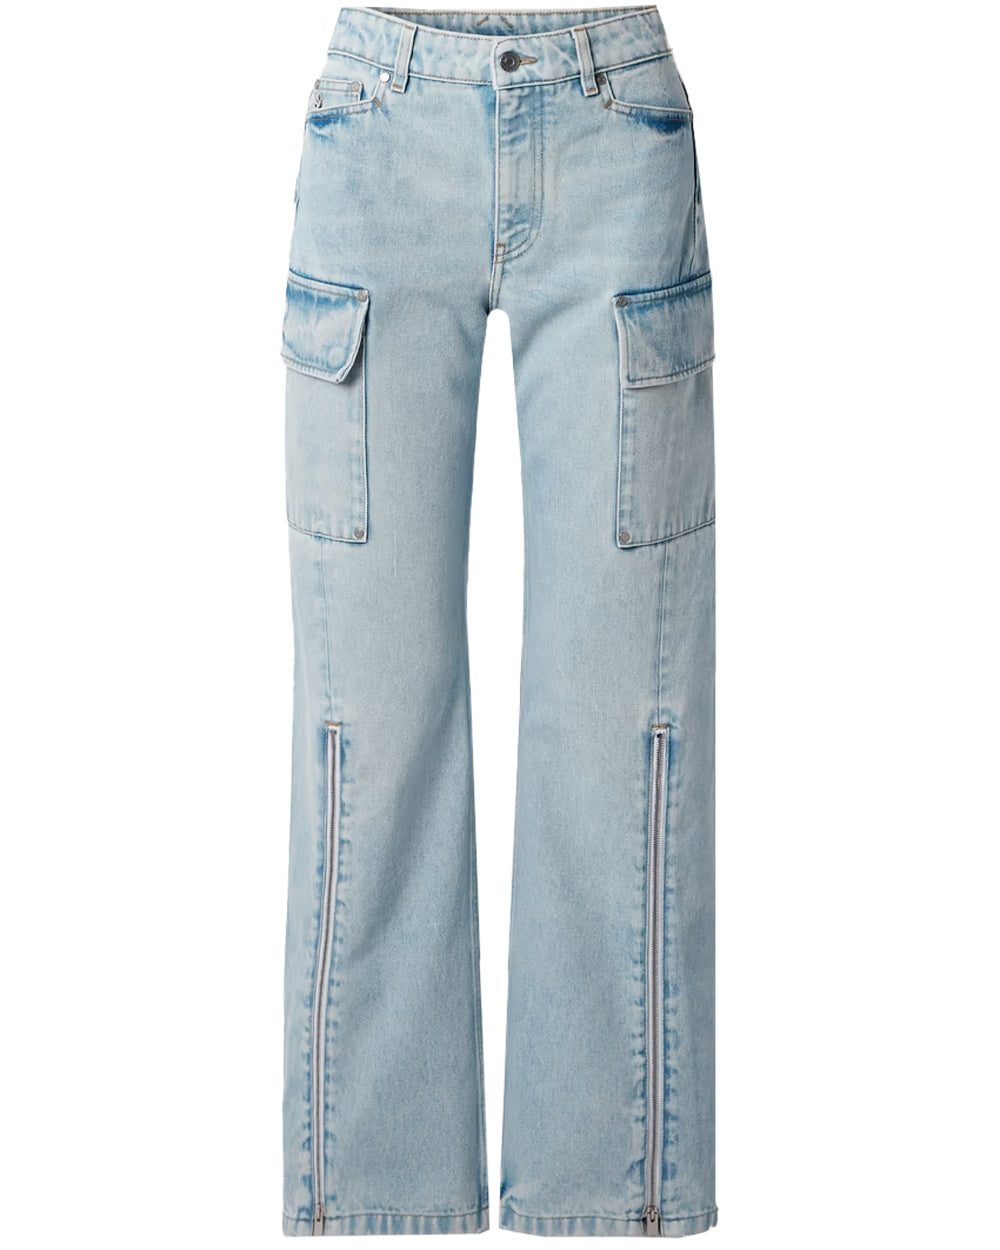 Zip Cargo Jean in Vintage Blue